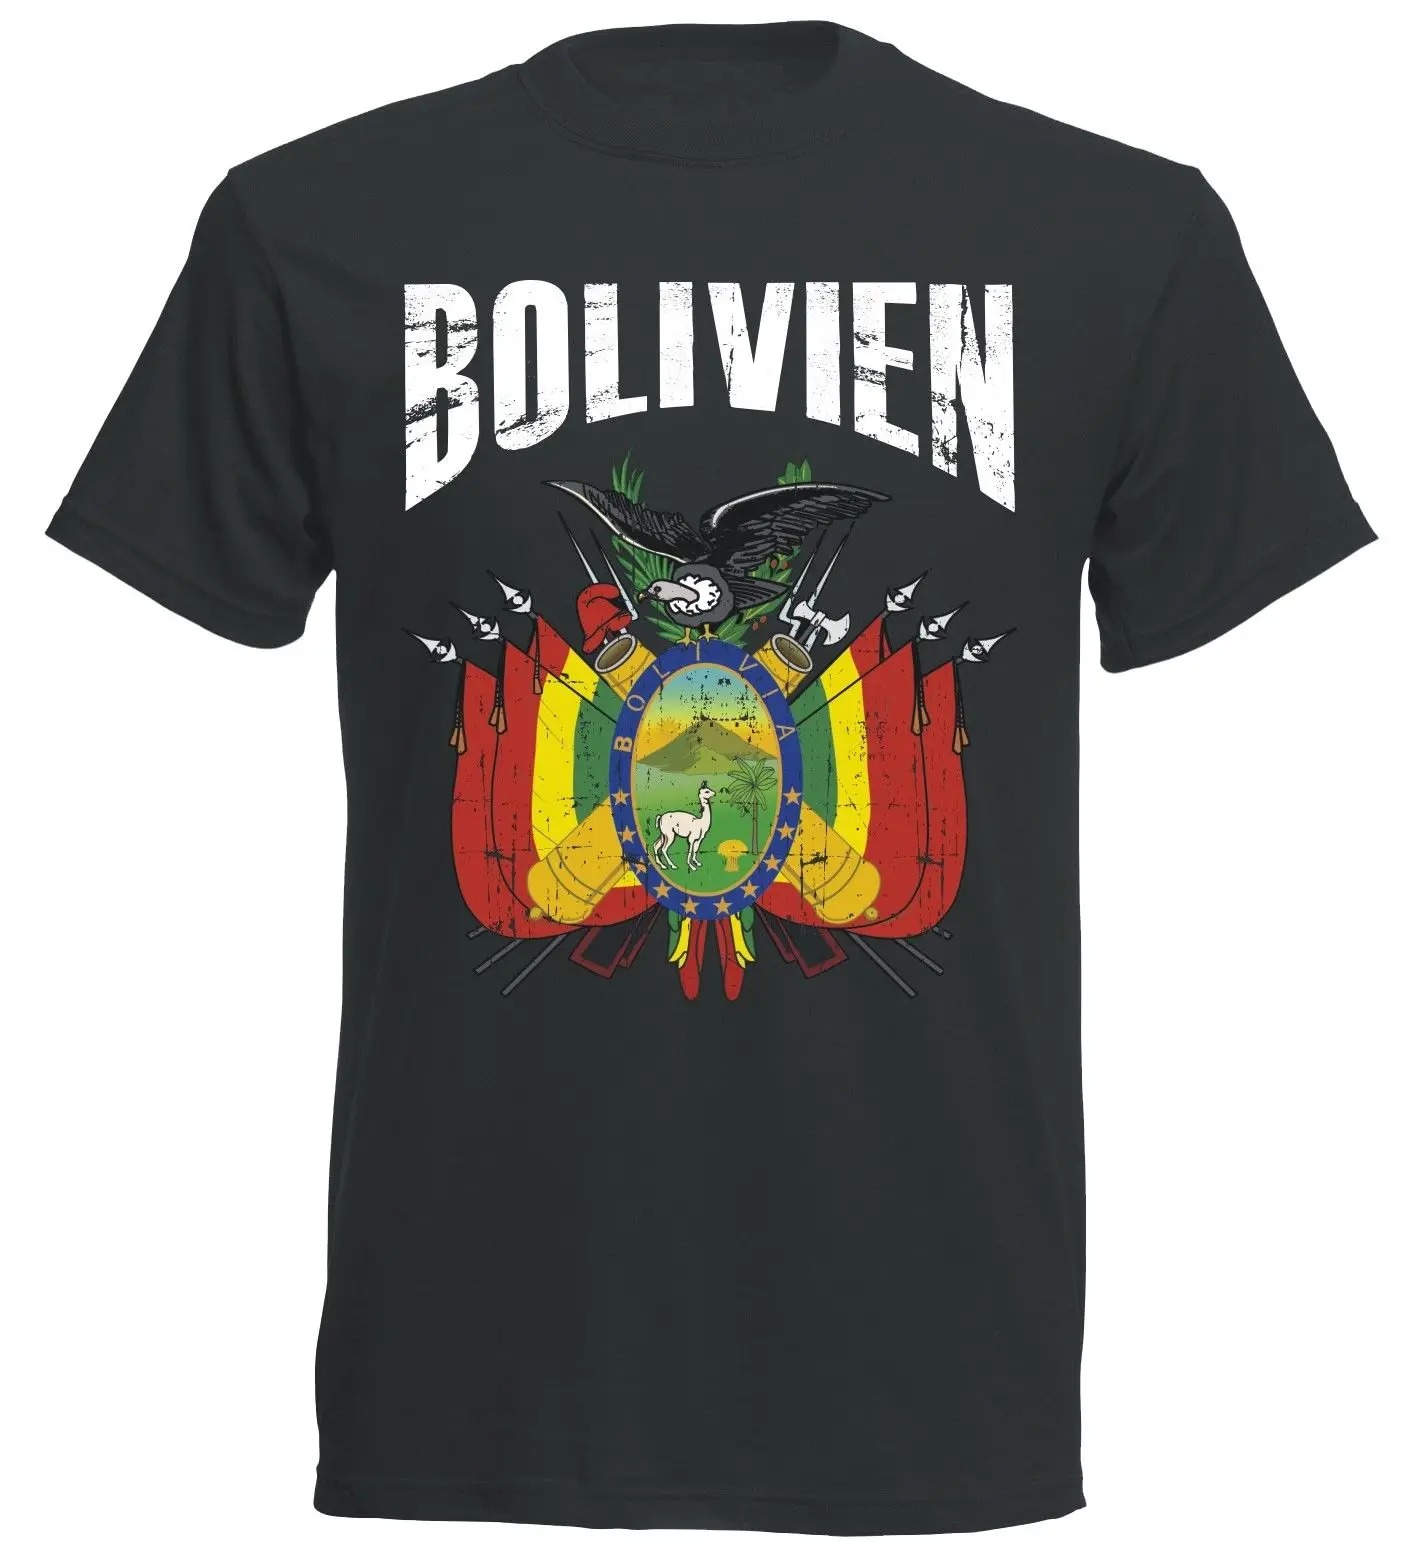 Simple Short-Sleeved Cotton T-Shirt Bolivien T-Shirt  Bolivia Vintage Men's Footballer